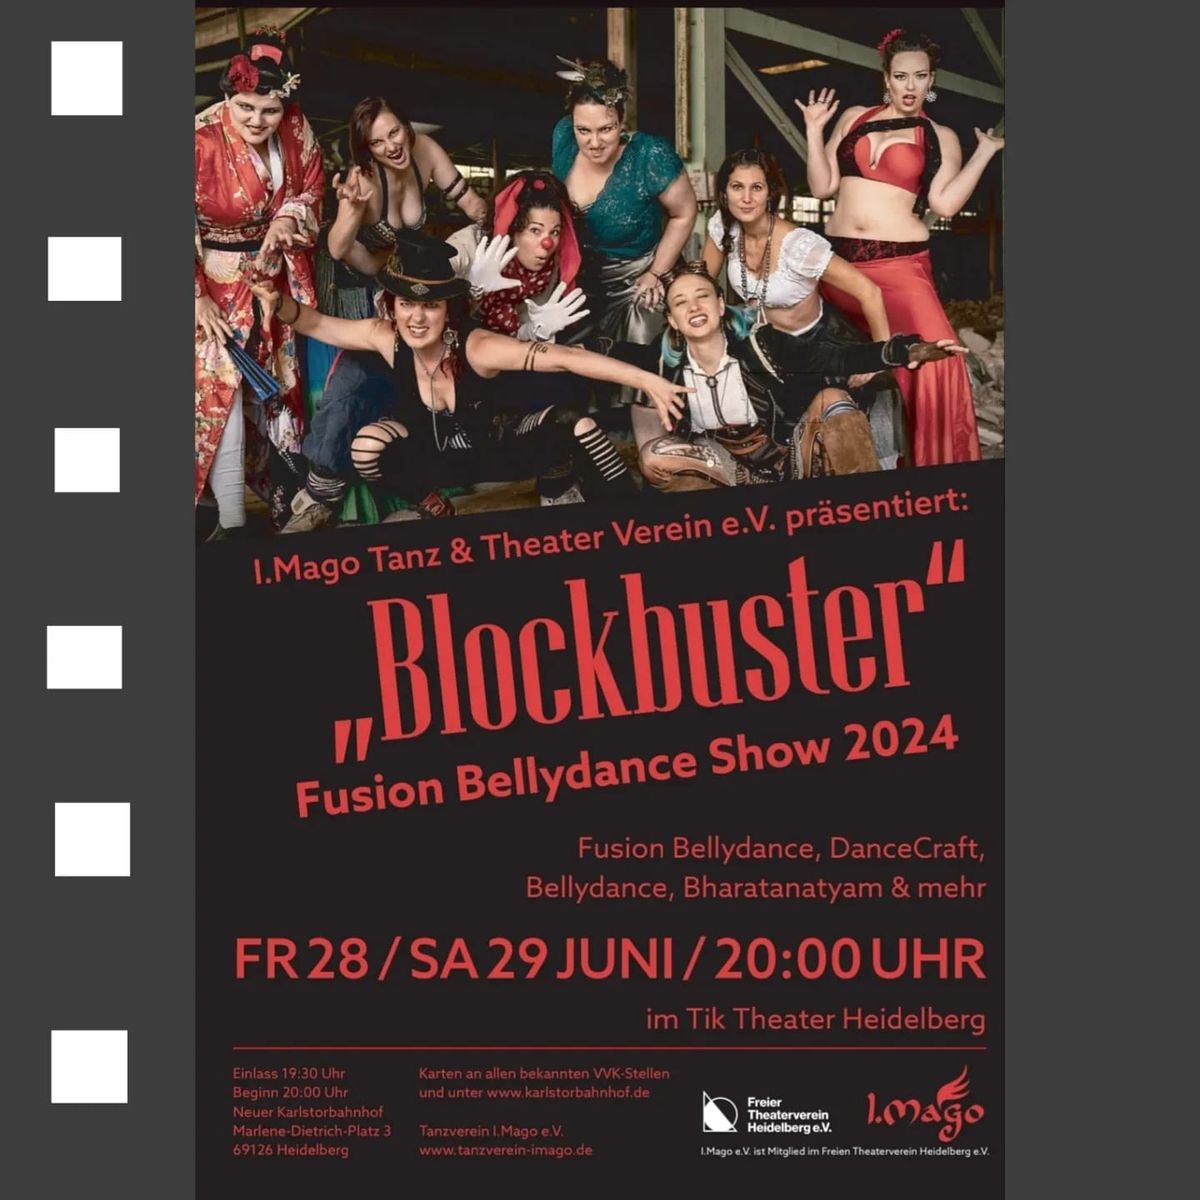 "Blockbuster" Fusion Bellydance Show 